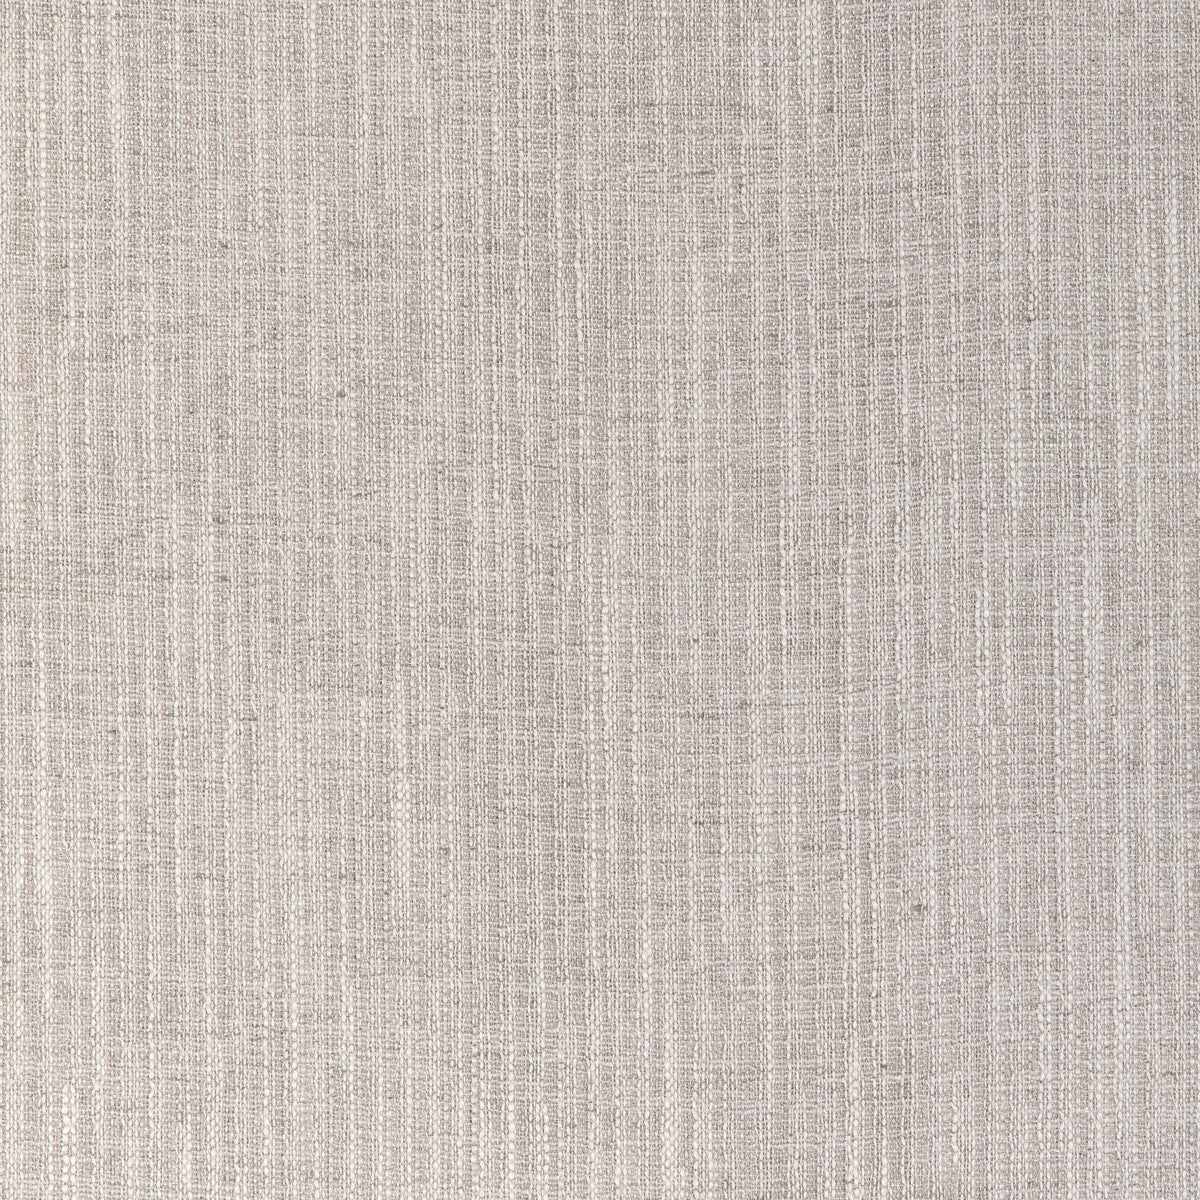 Kravet Smart fabric in 36658-1101 color - pattern 36658.1101.0 - by Kravet Smart in the Performance Kravetarmor collection